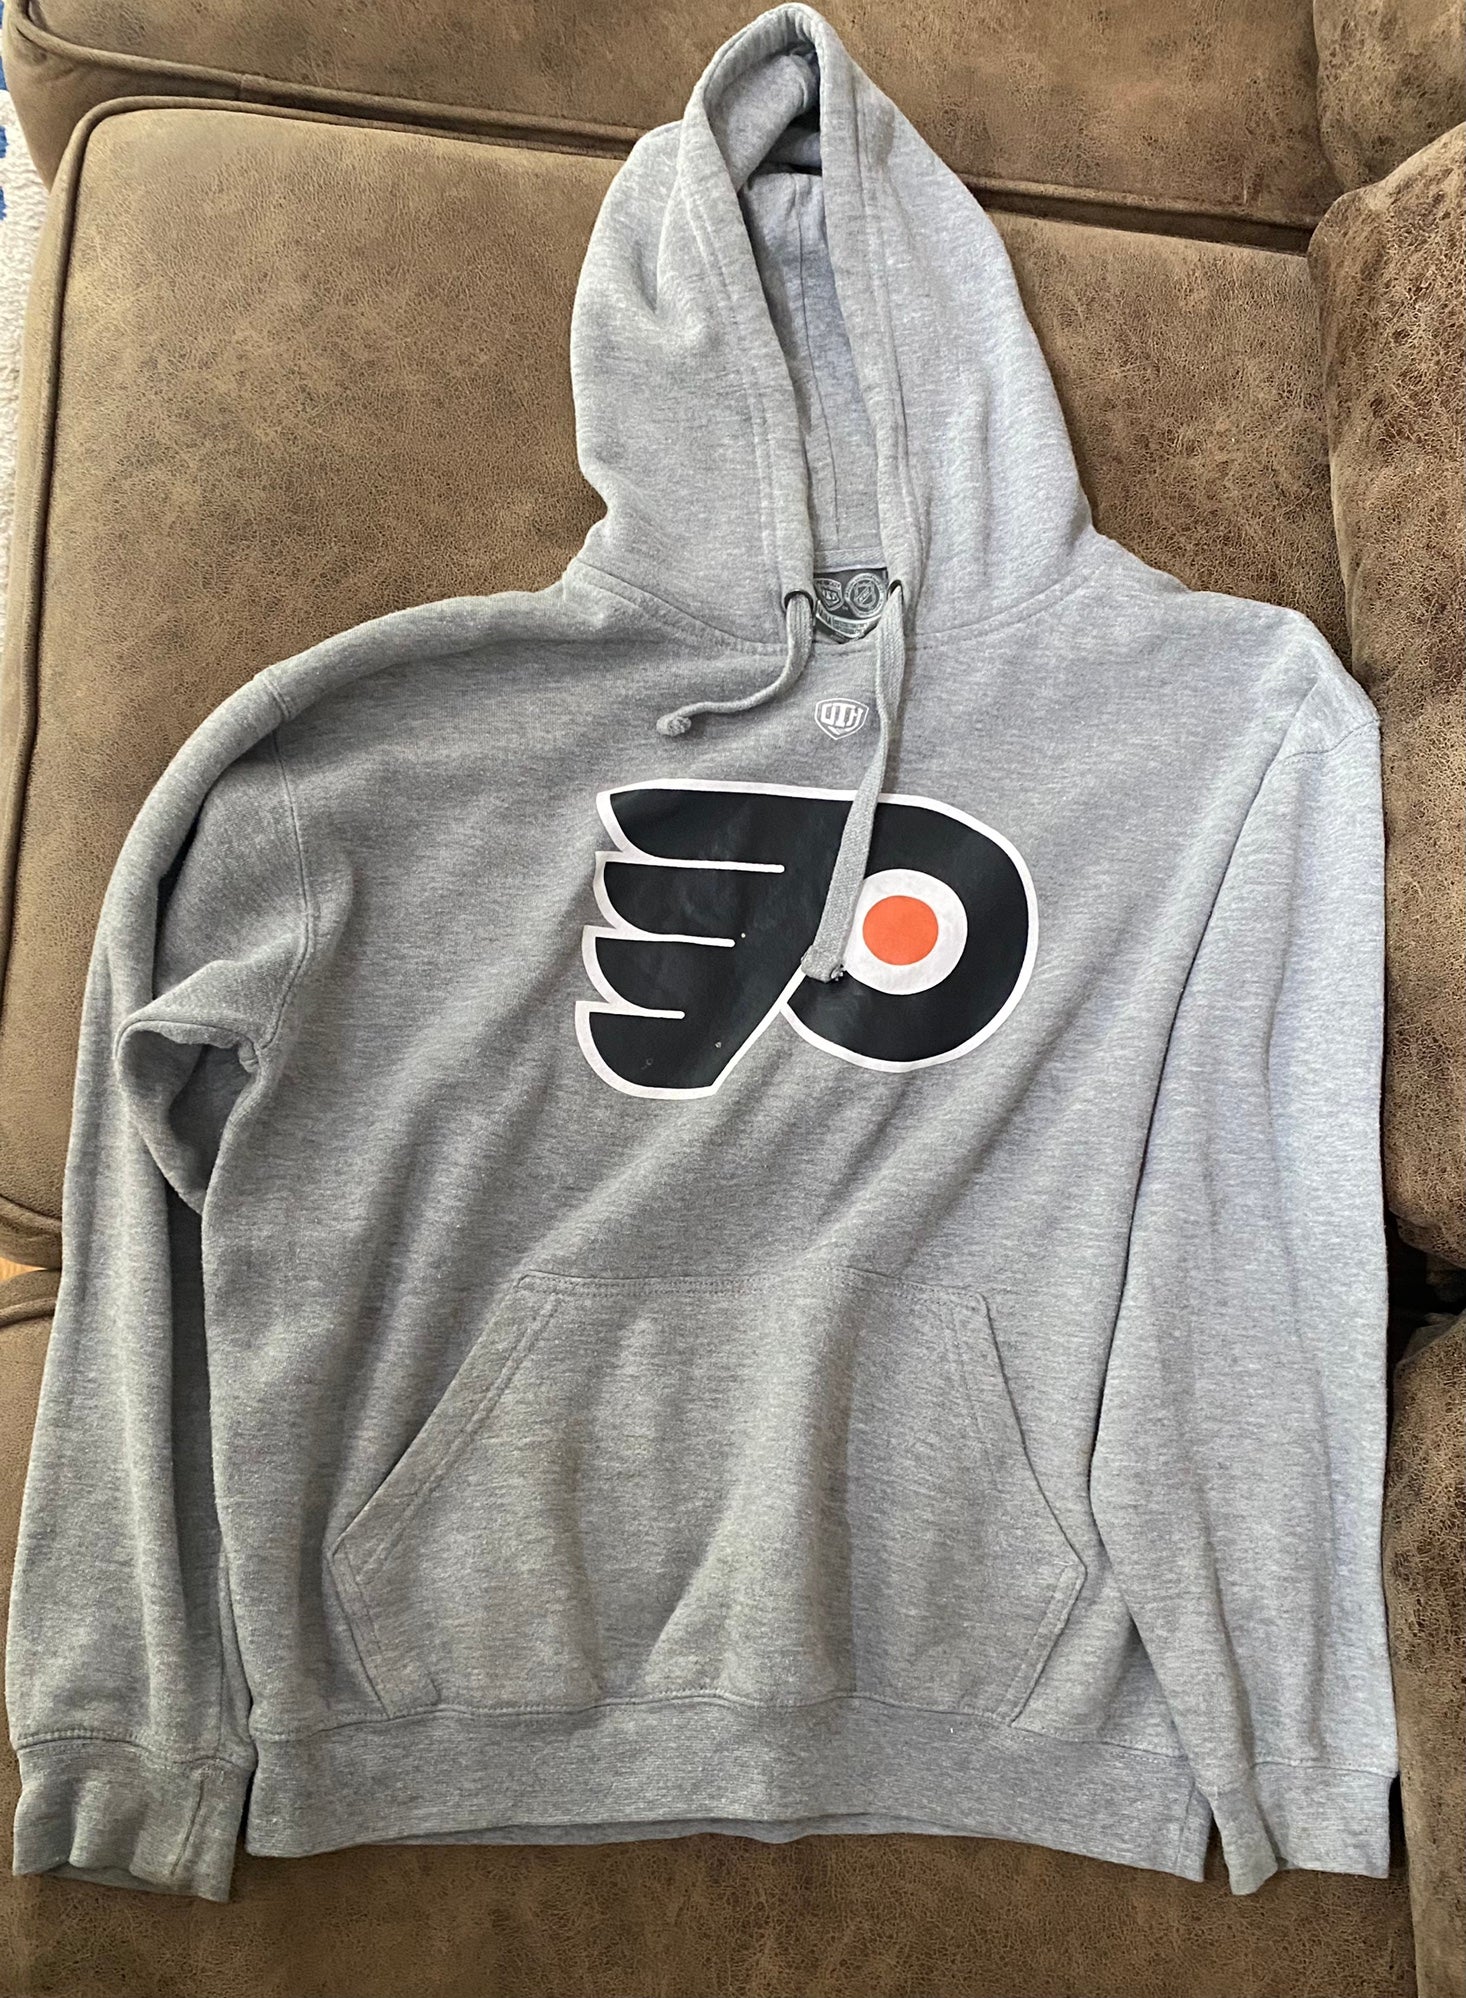 Philadelphia Flyers sell the team shirt, hoodie, sweater, long